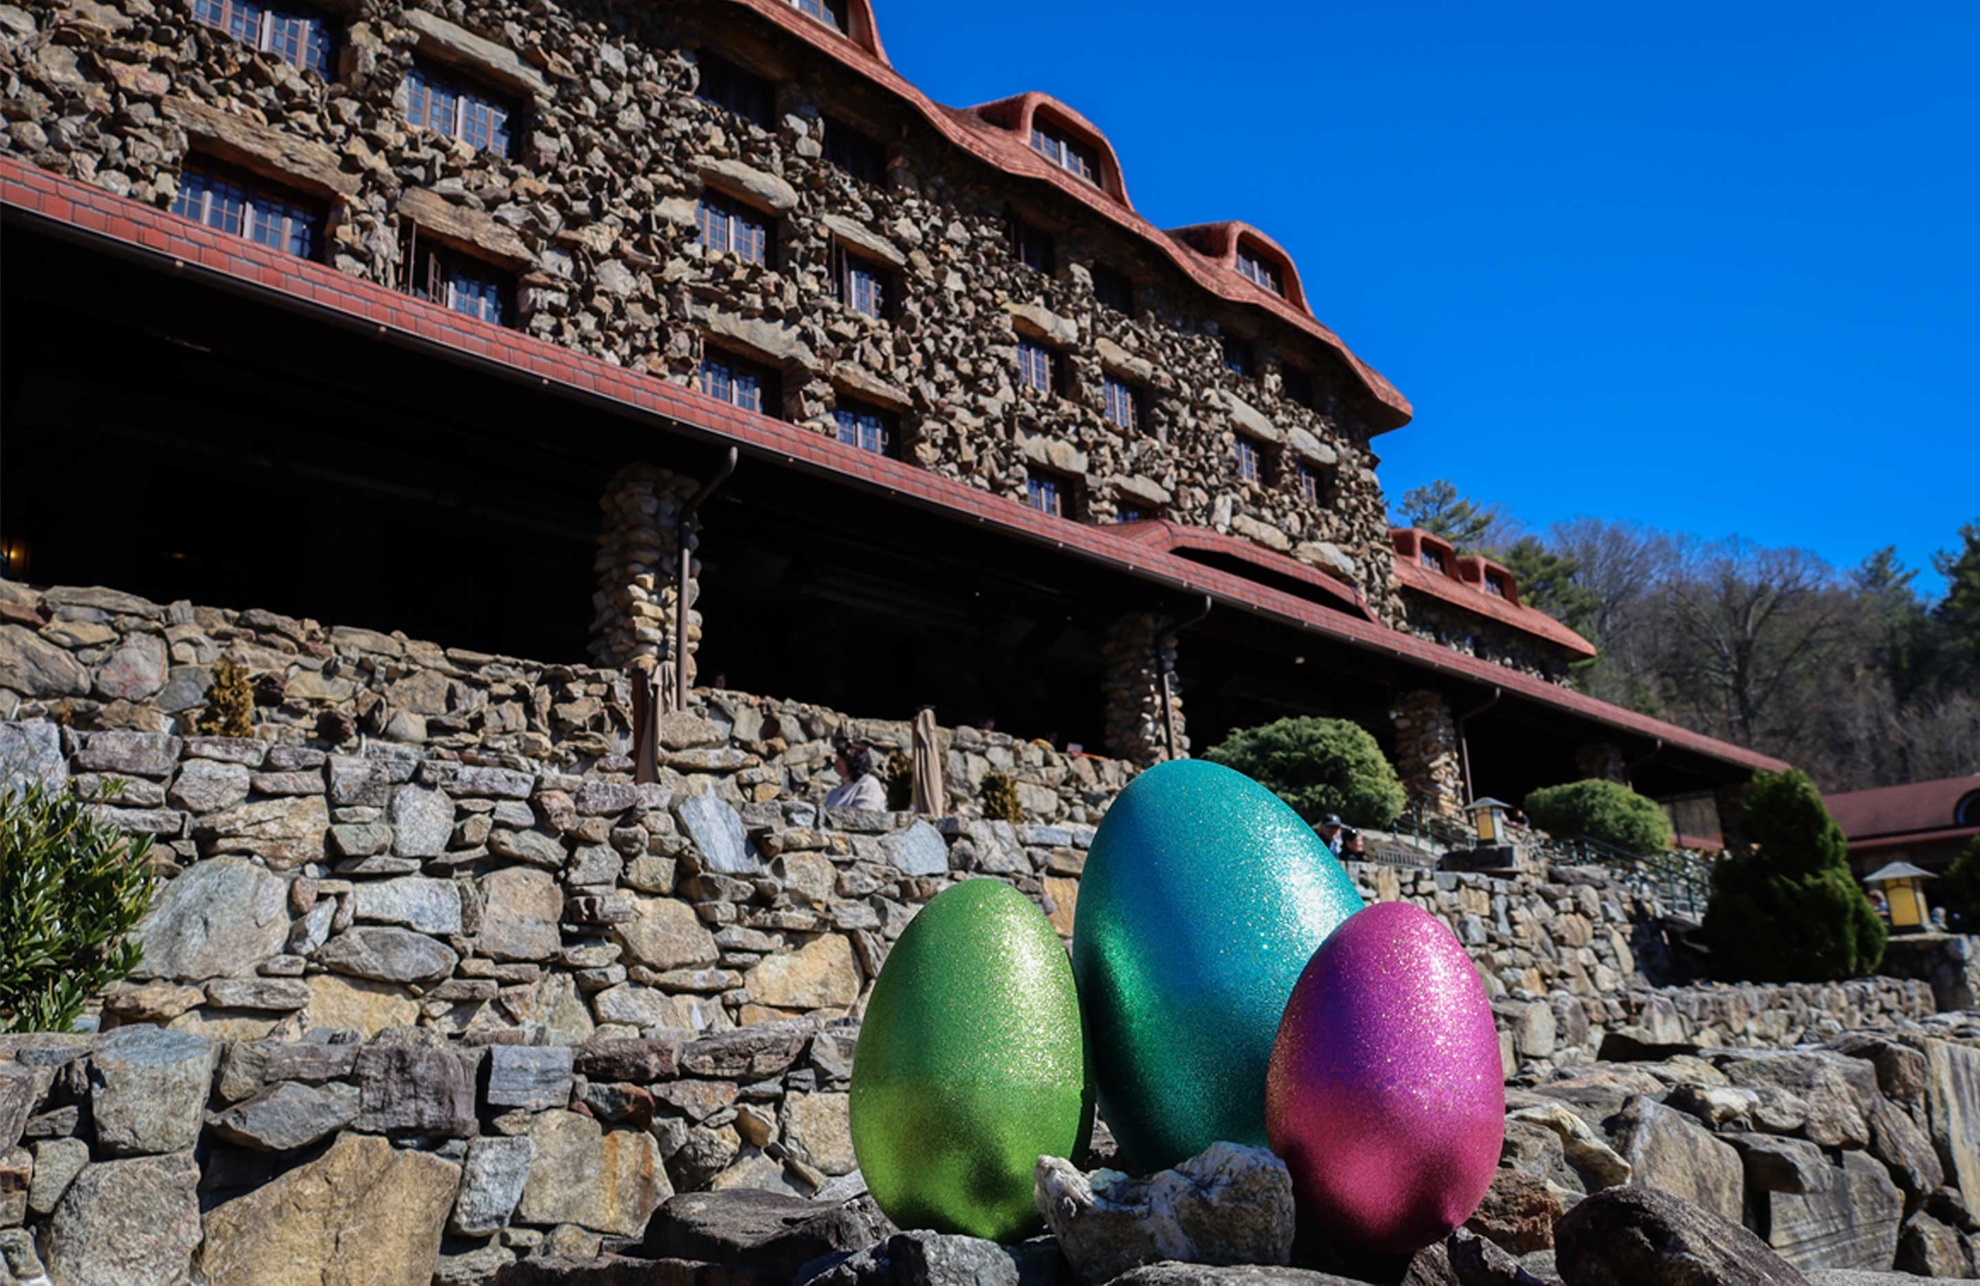 Easter eggs on Omni Grove Park Inn lawn